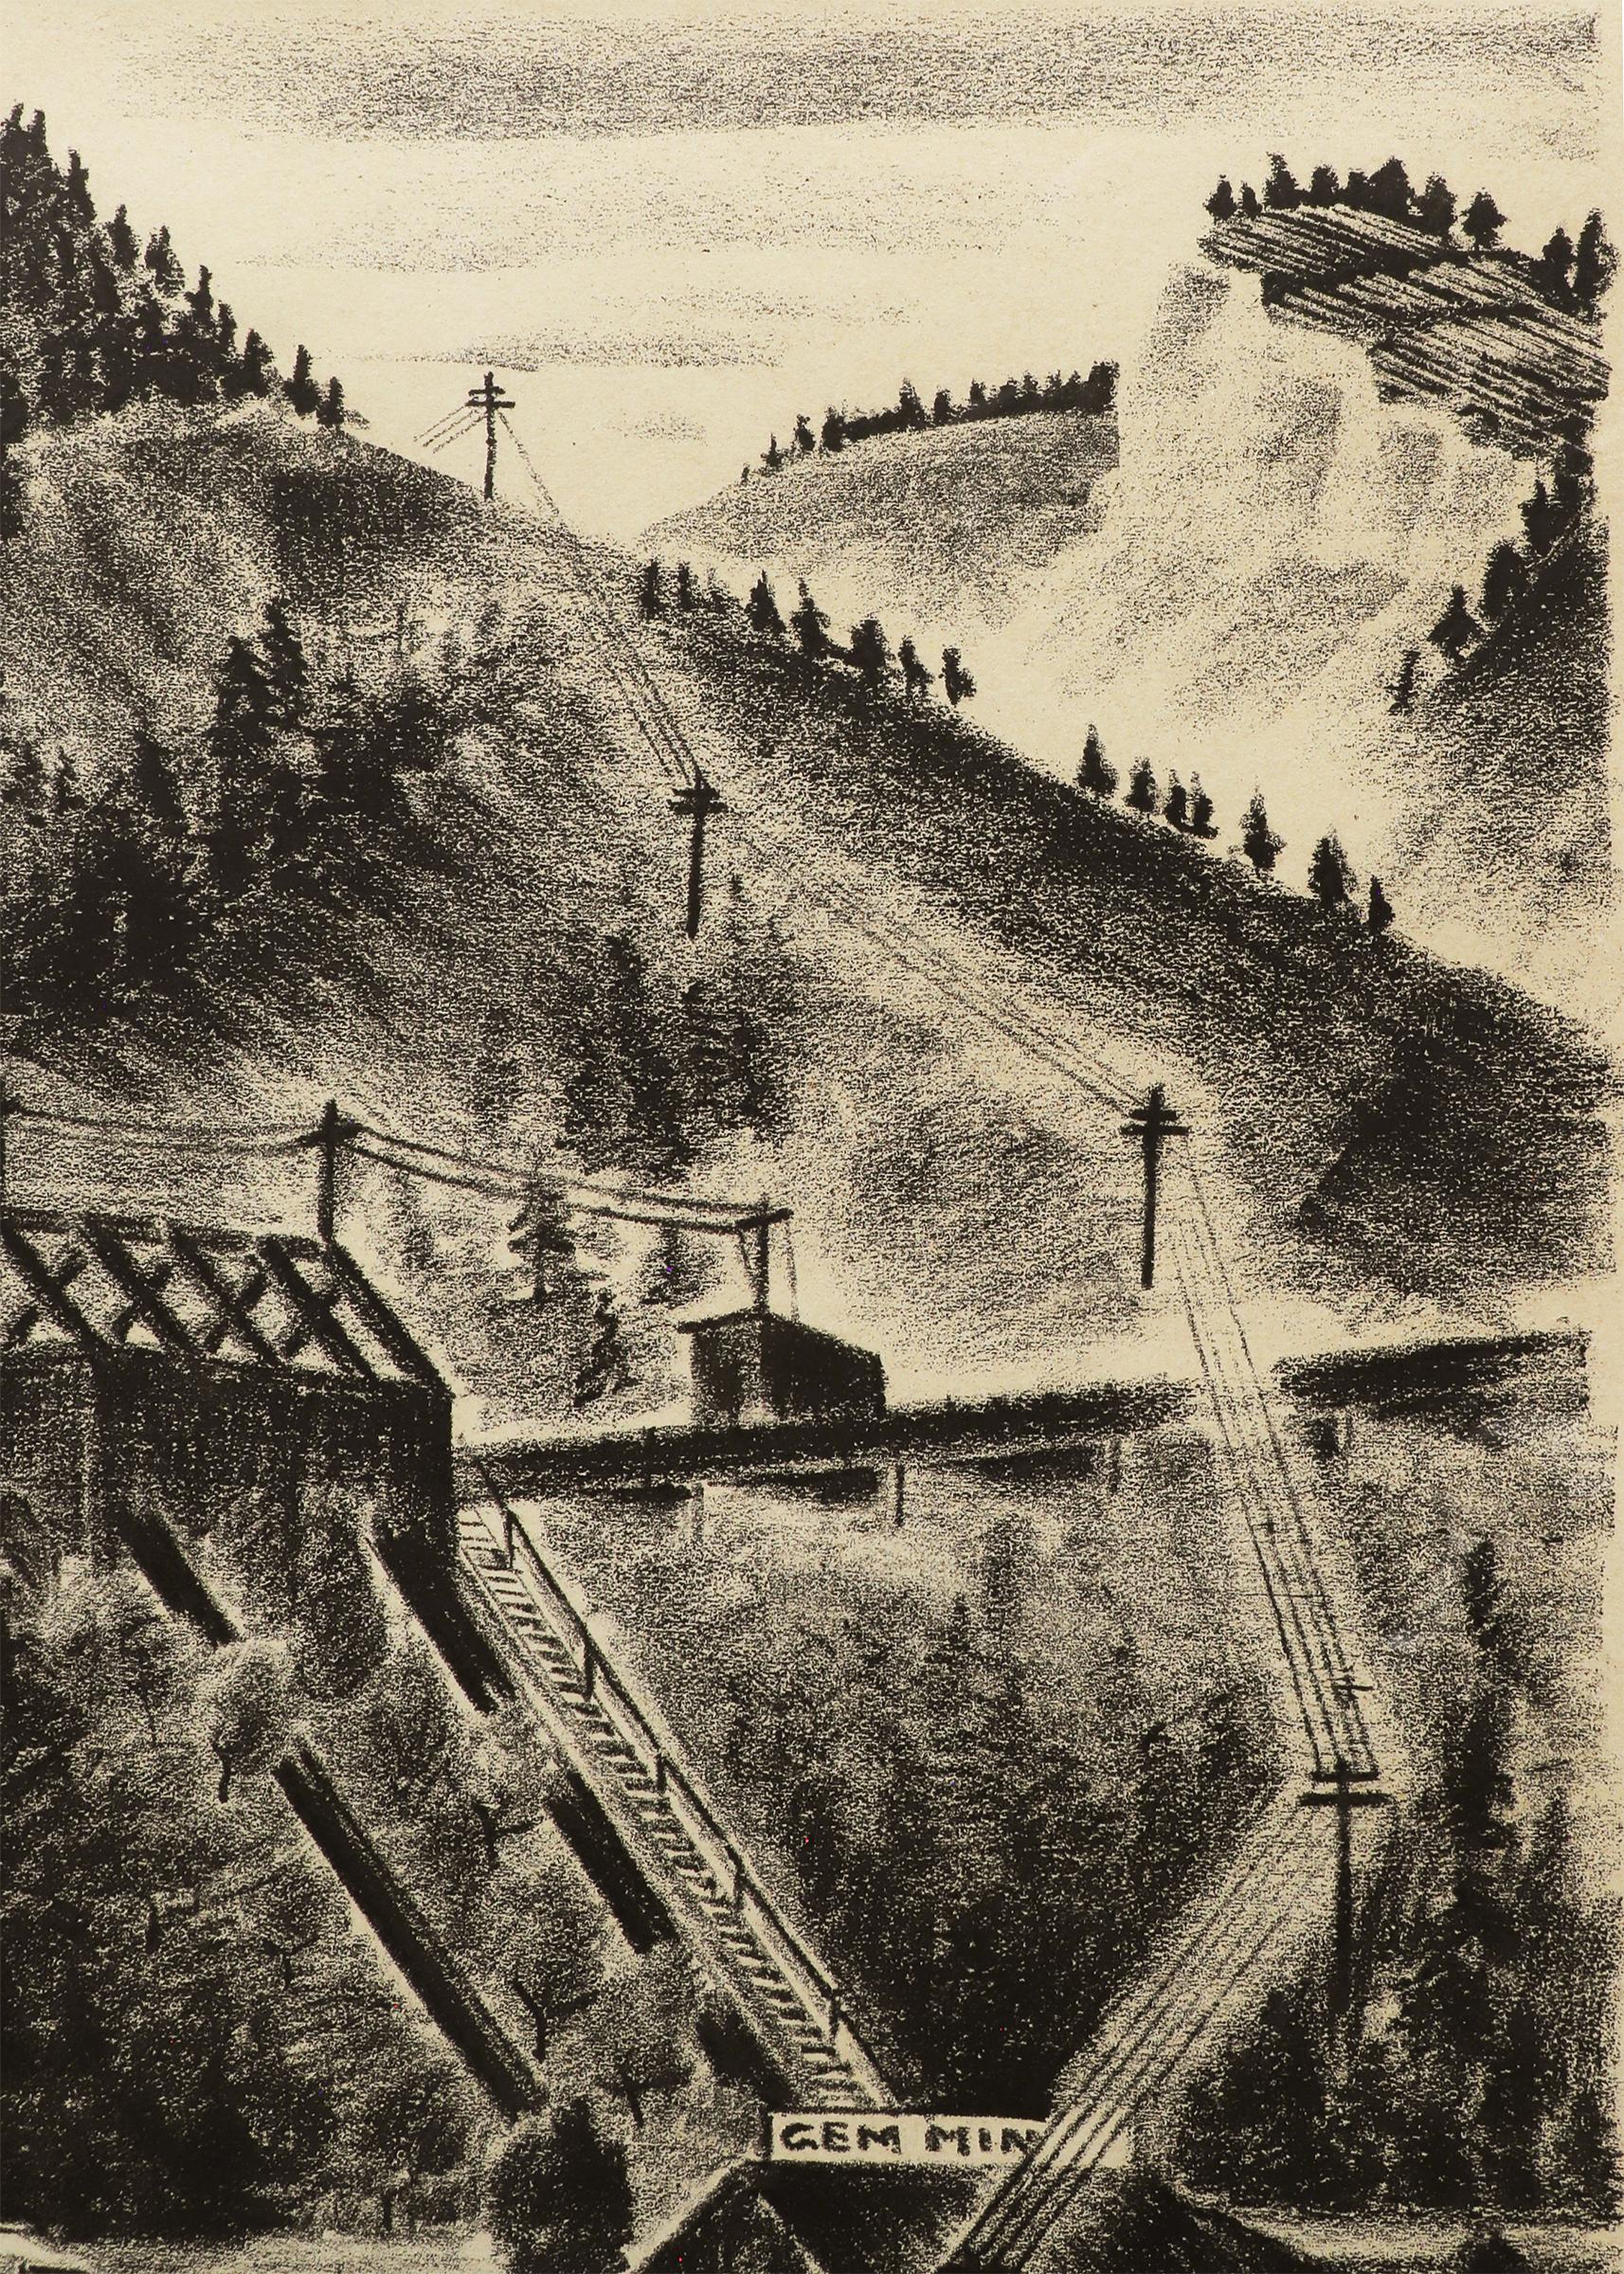 Gem Mining Company, Colorado Landscape Mining Scene 1930s Lithograph Print For Sale 2